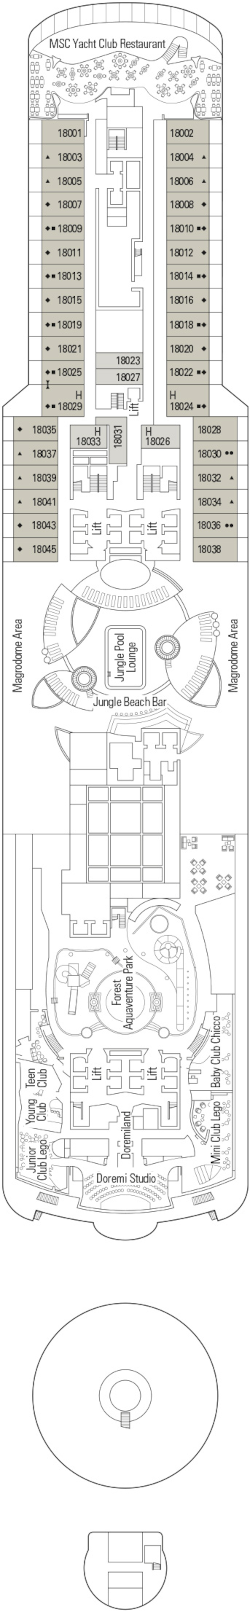 Msc Seaview Deck Eighteen Deck Plan